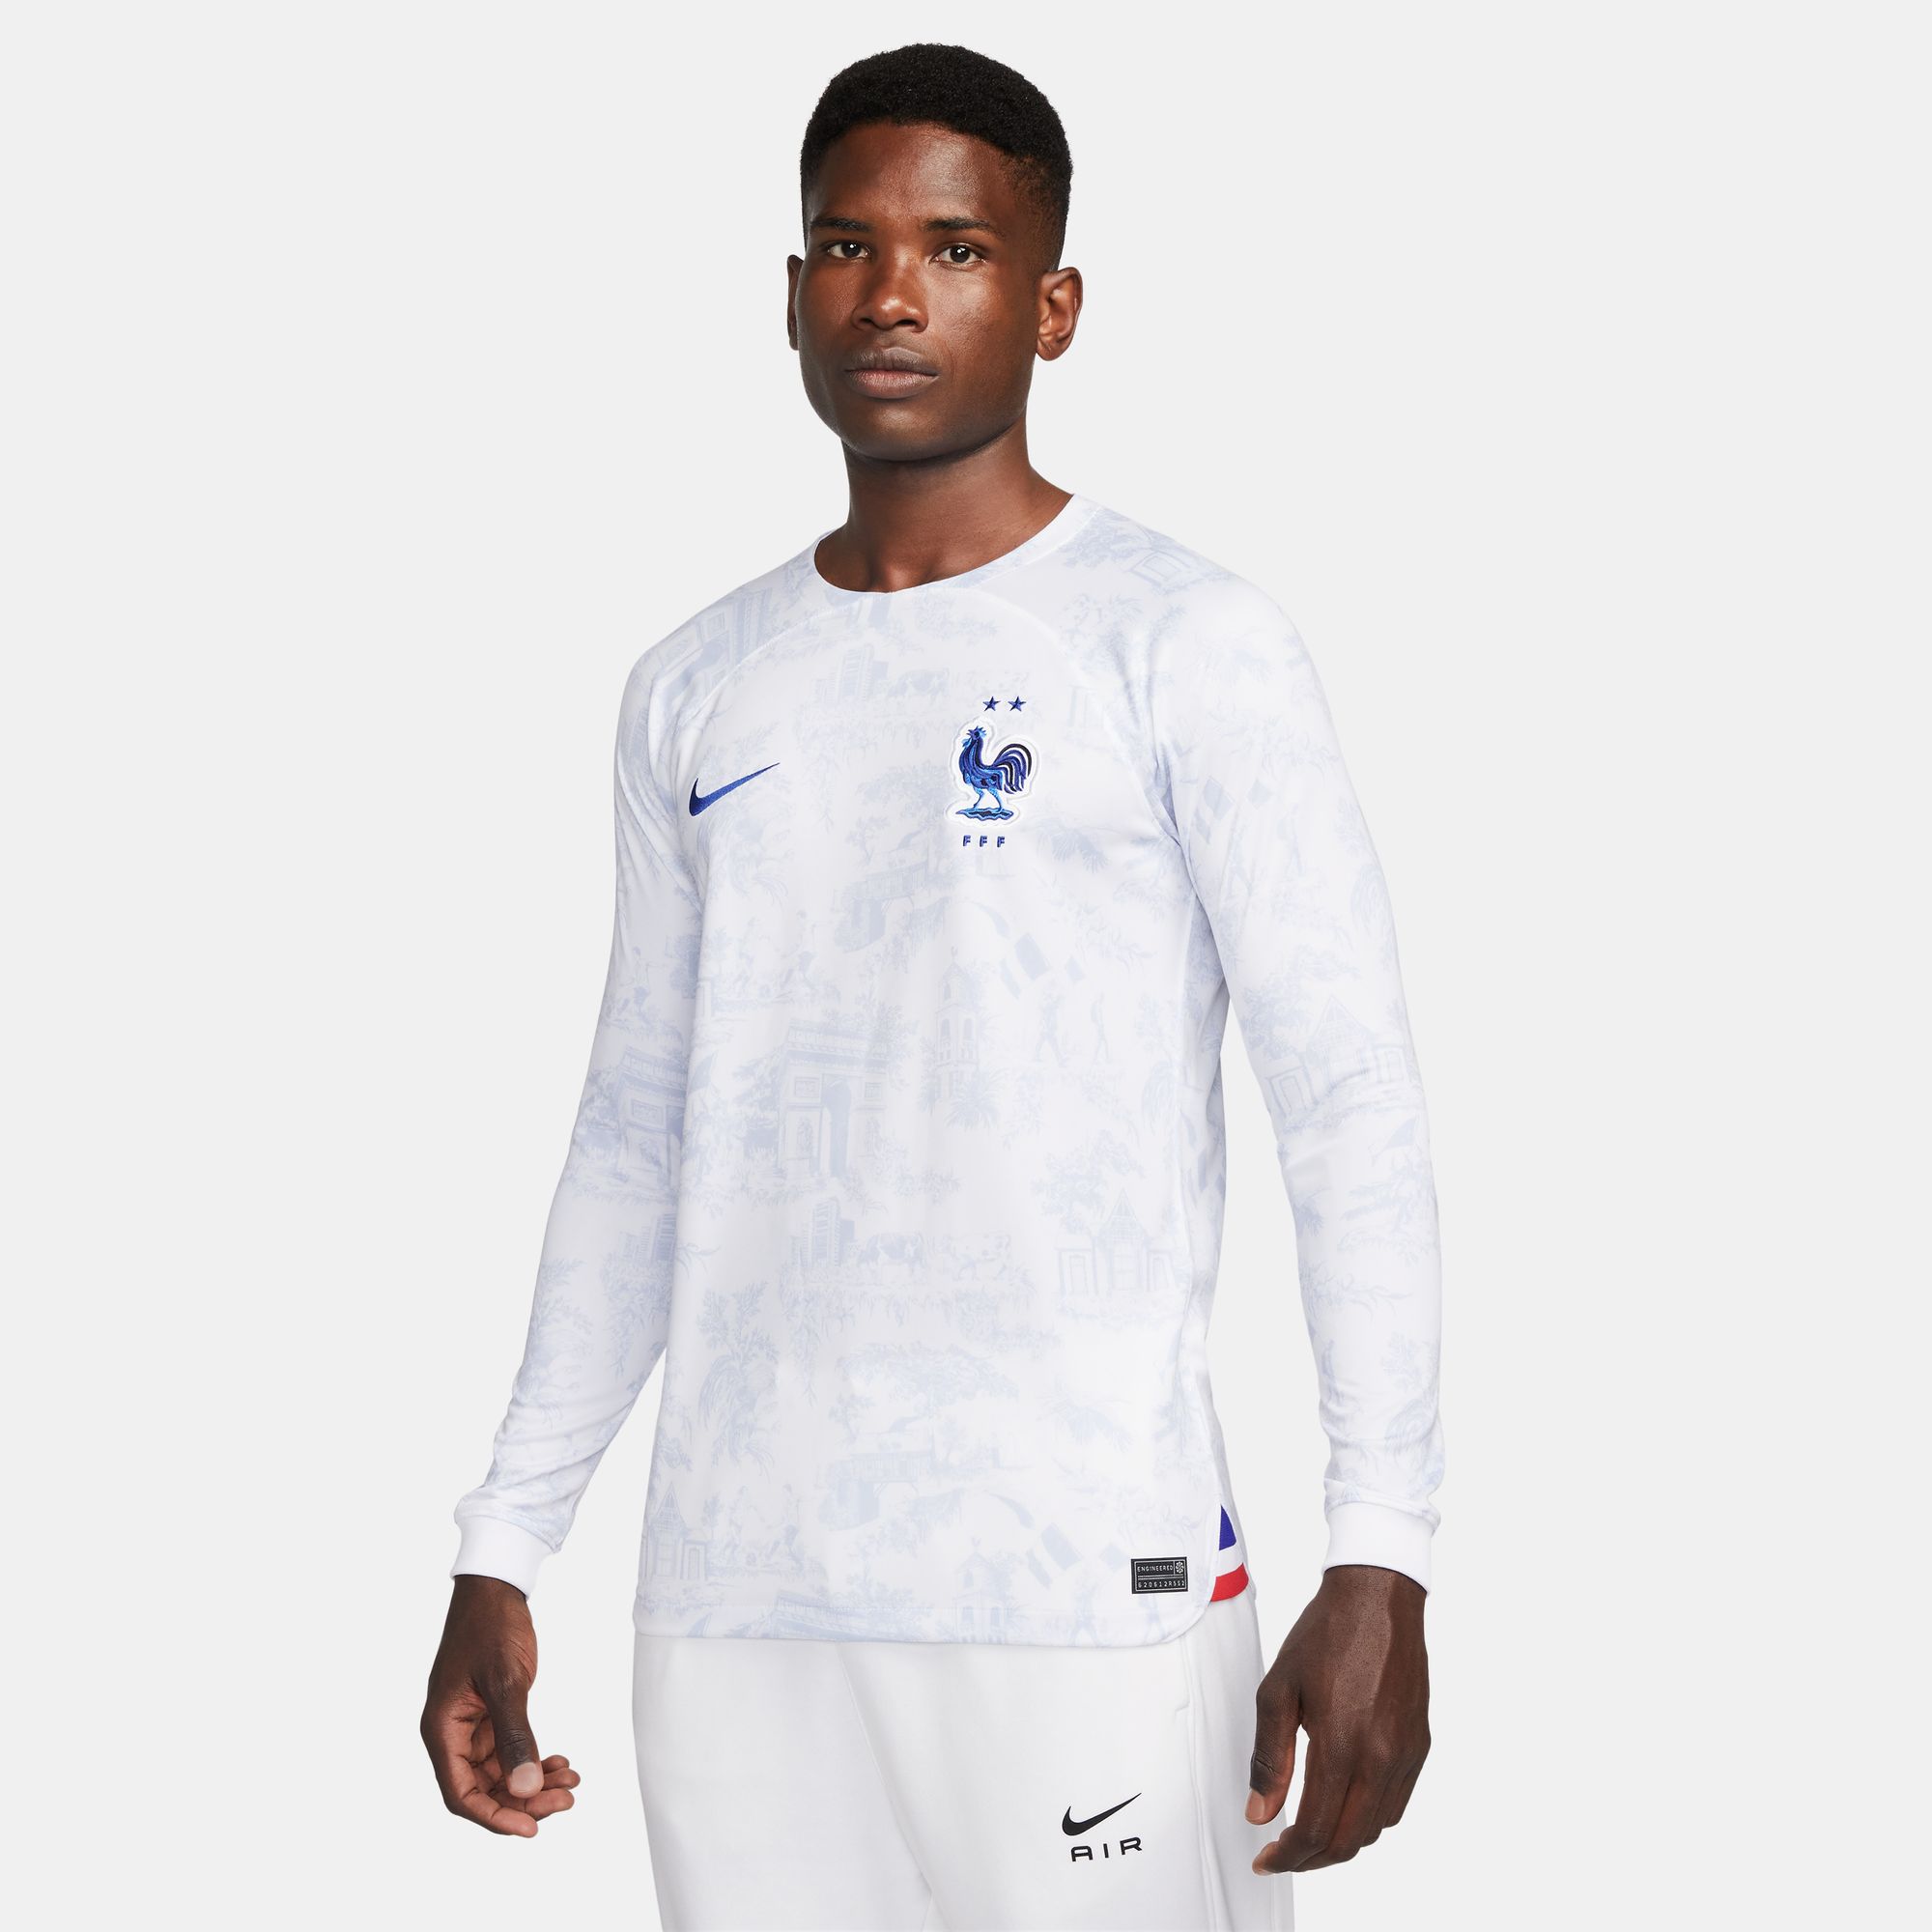 Nike Squad Leg Sleeve - Royal Blue/White - Mens Soccer Teamwear